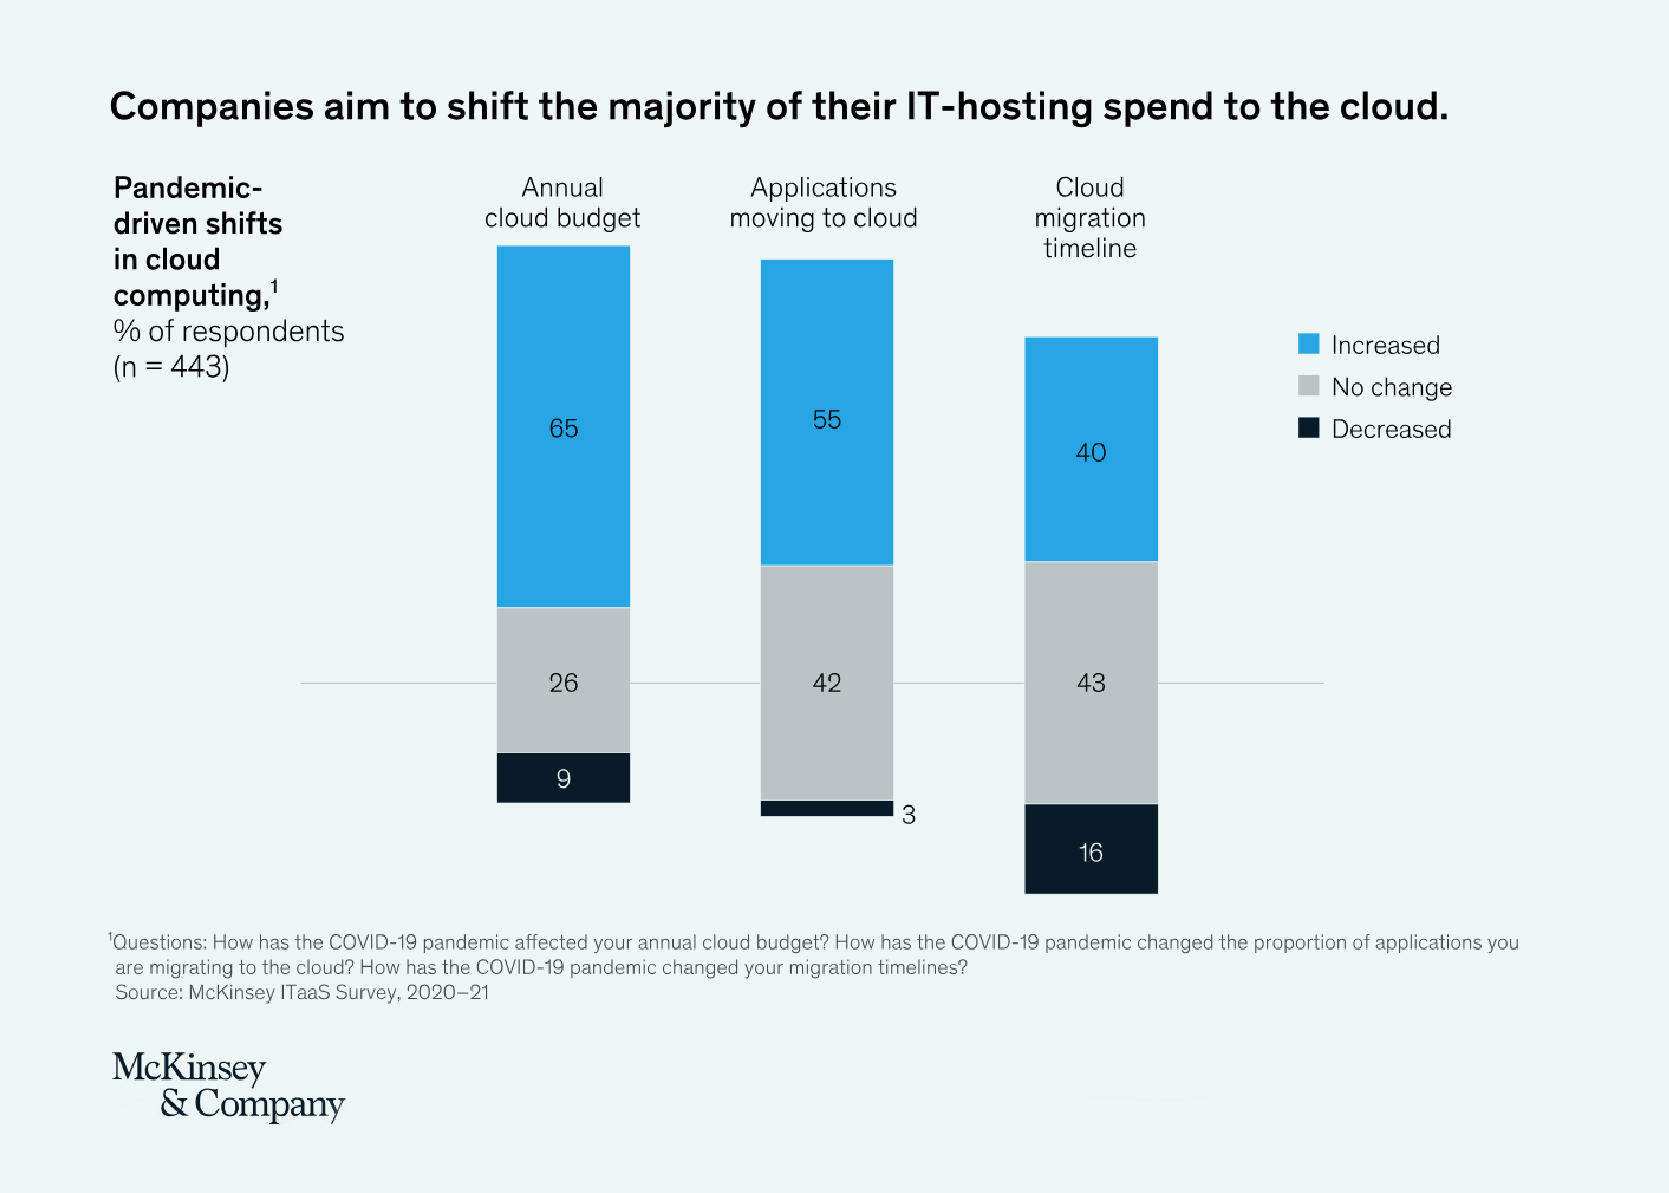 Cloud computing spending